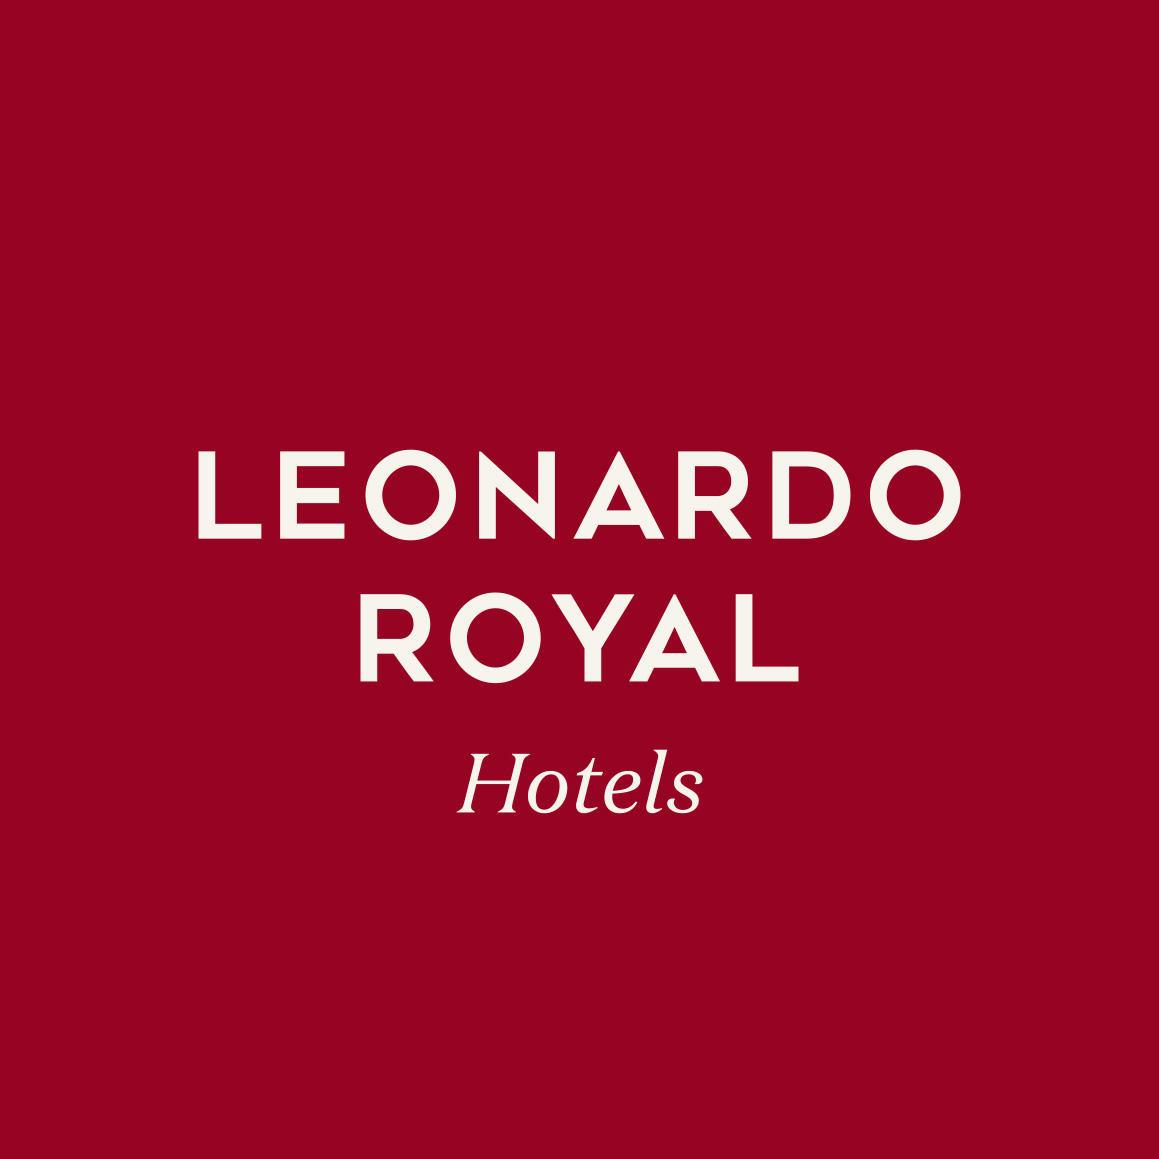 Leonardo Royal Hotel London Tower Bridge - London, London E1 8GP - 020 7959 5000 | ShowMeLocal.com